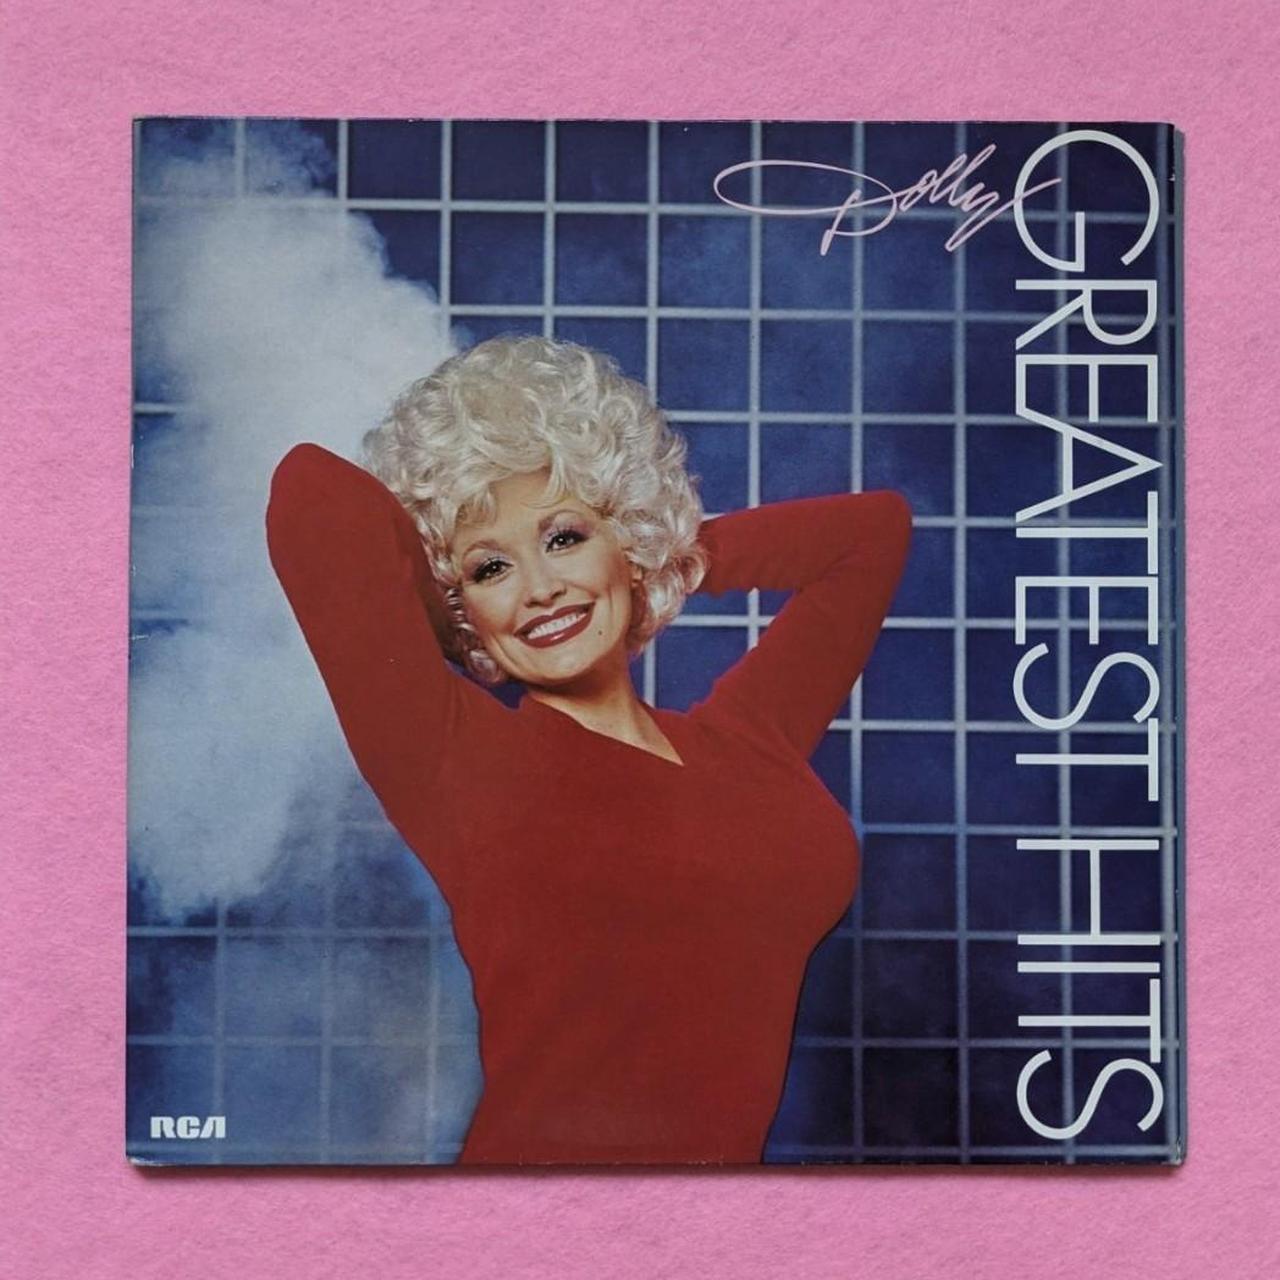 Dolly Parton - Greatest Hits (1982) - Vinyl Album... - Depop